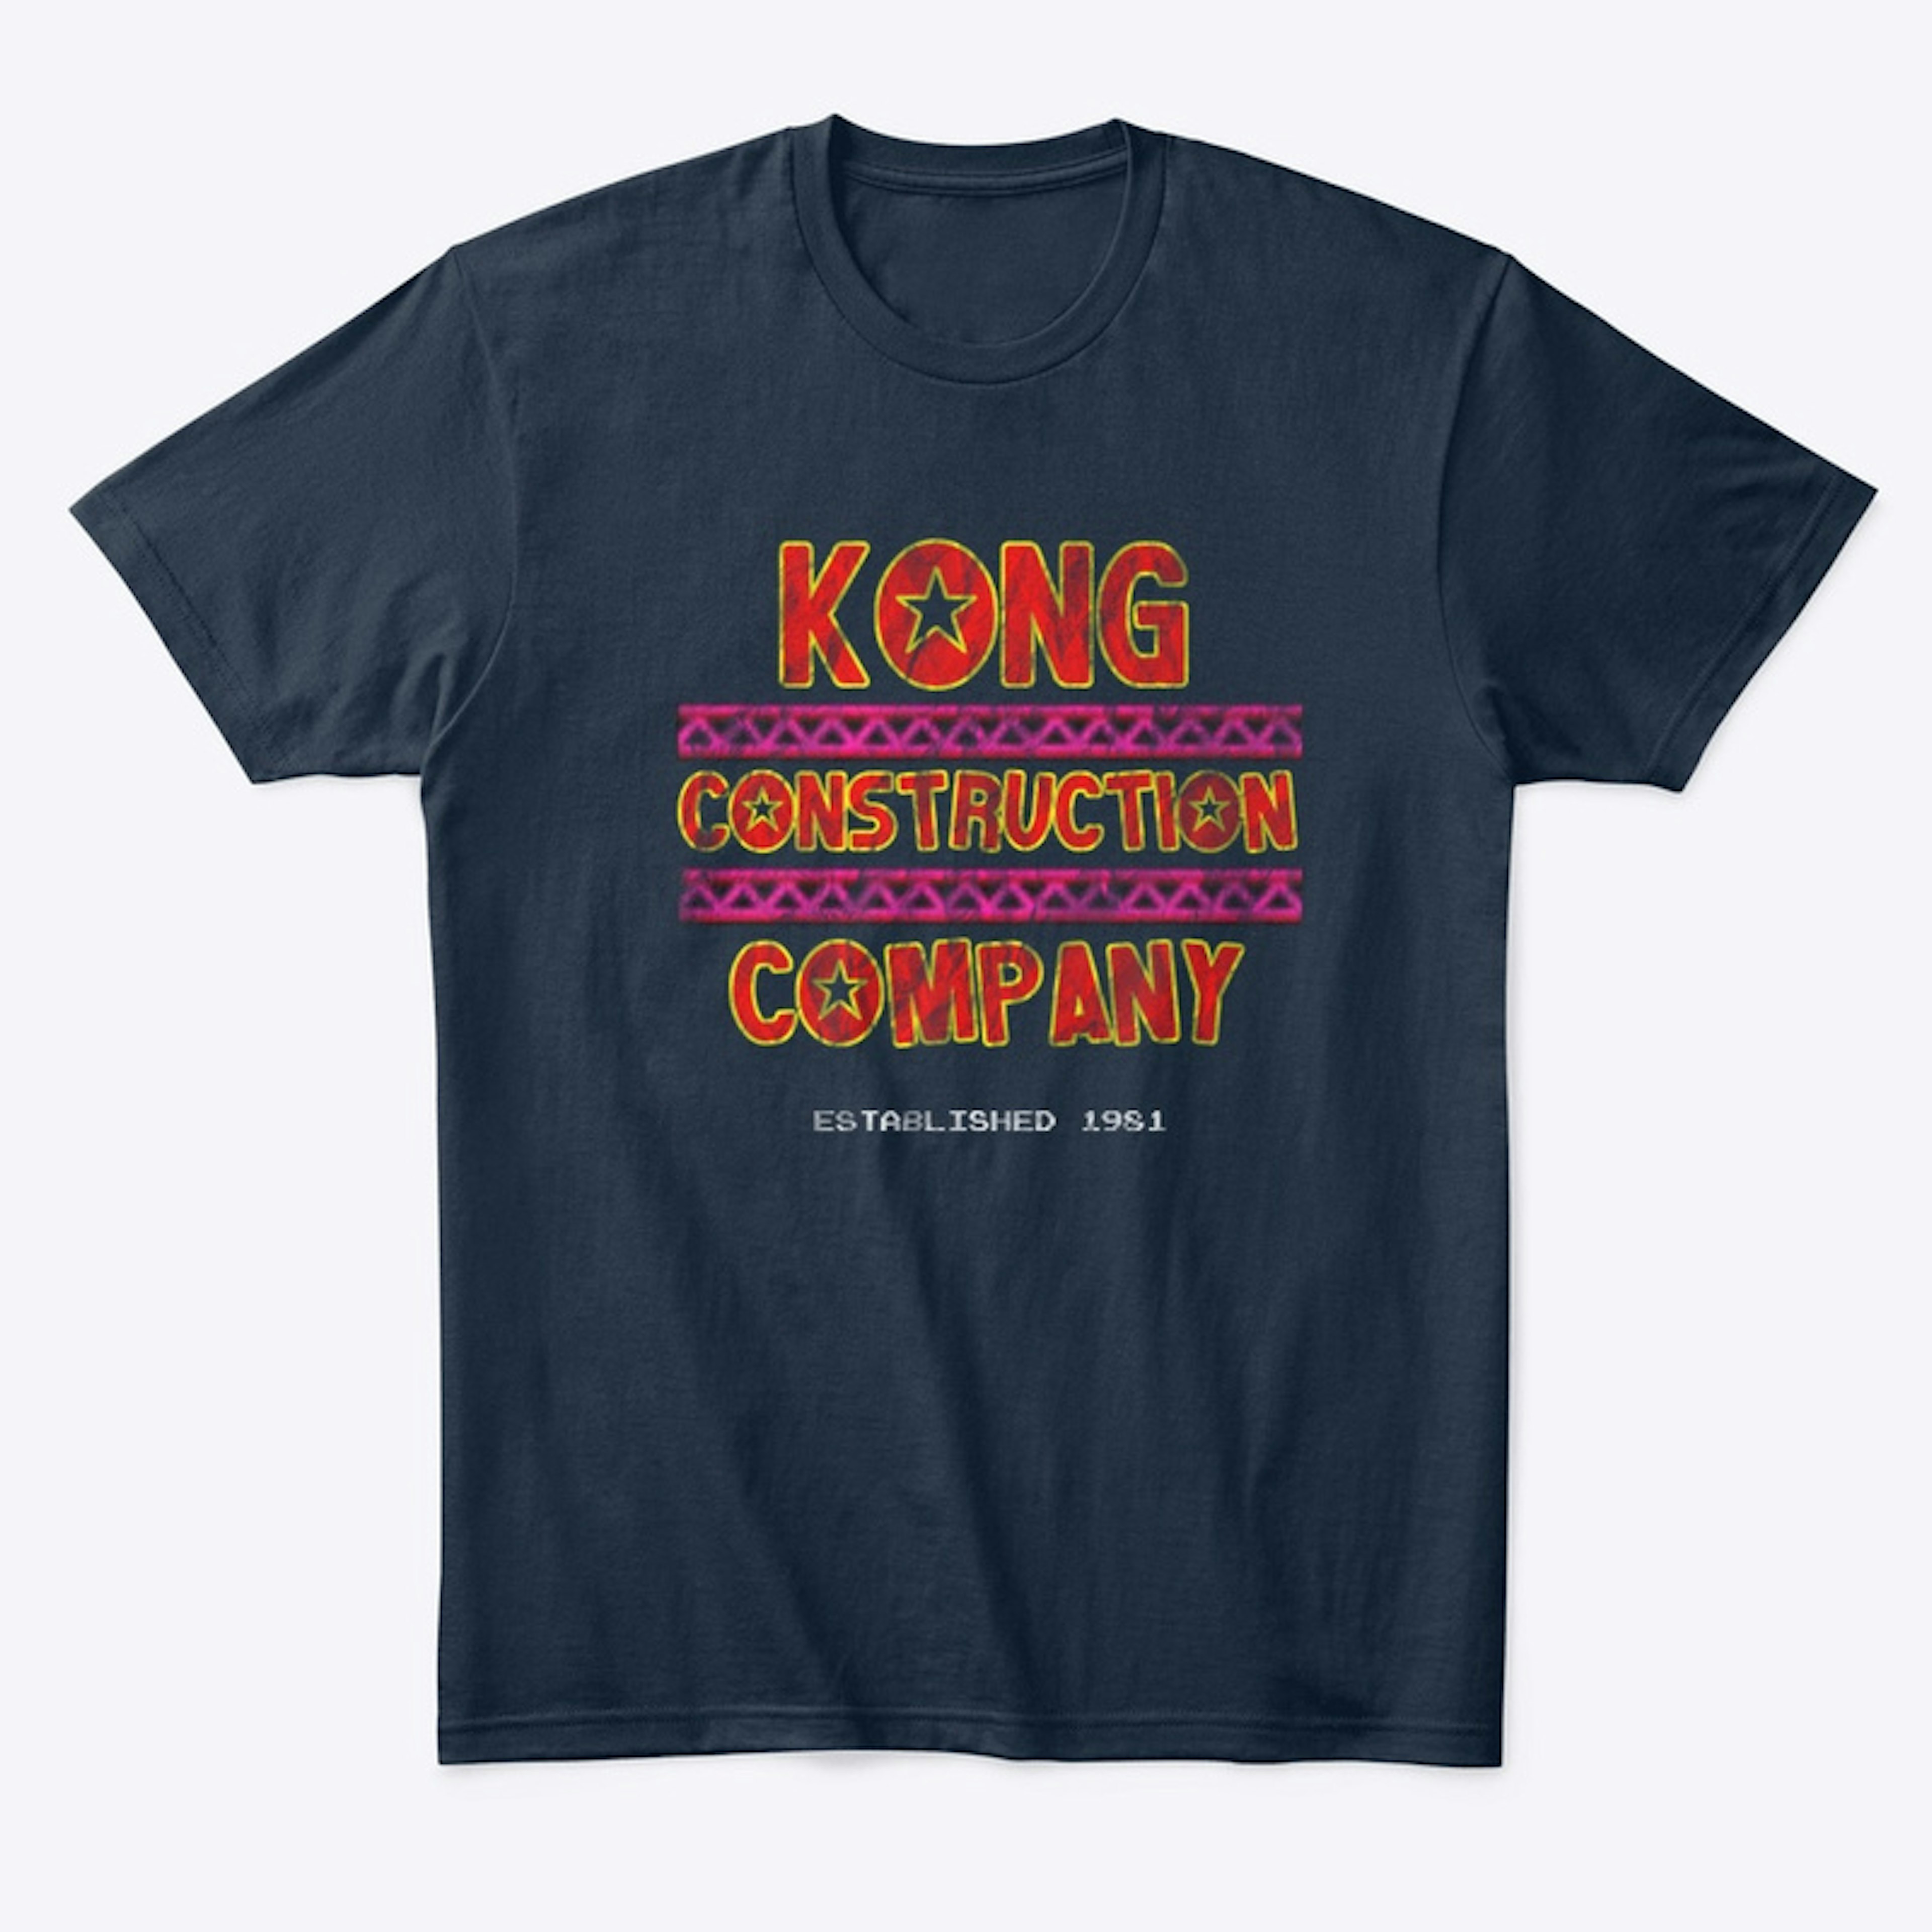 Kong Construction Company